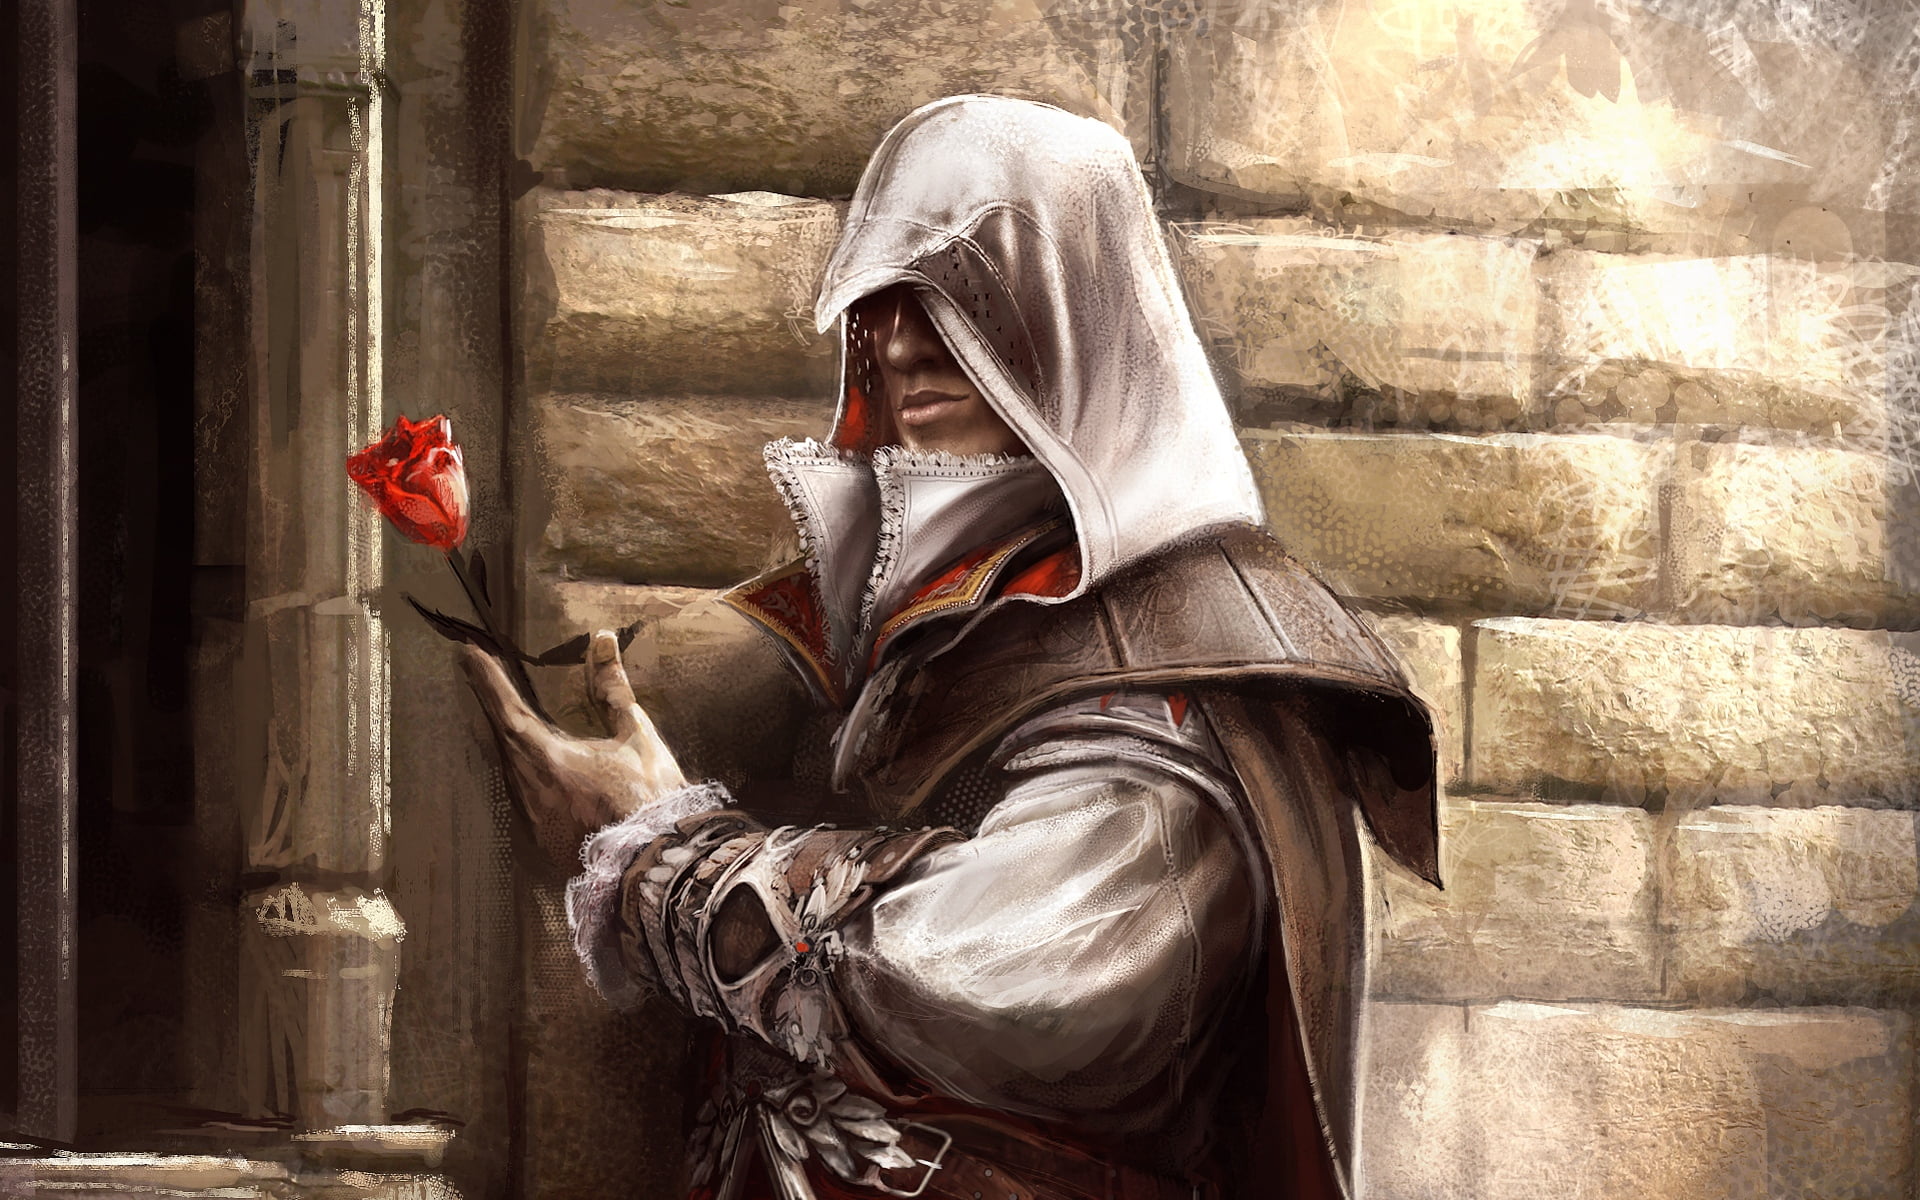 Assassin's Creed Ezio digital wallpaper, assassins creed, desmond miles